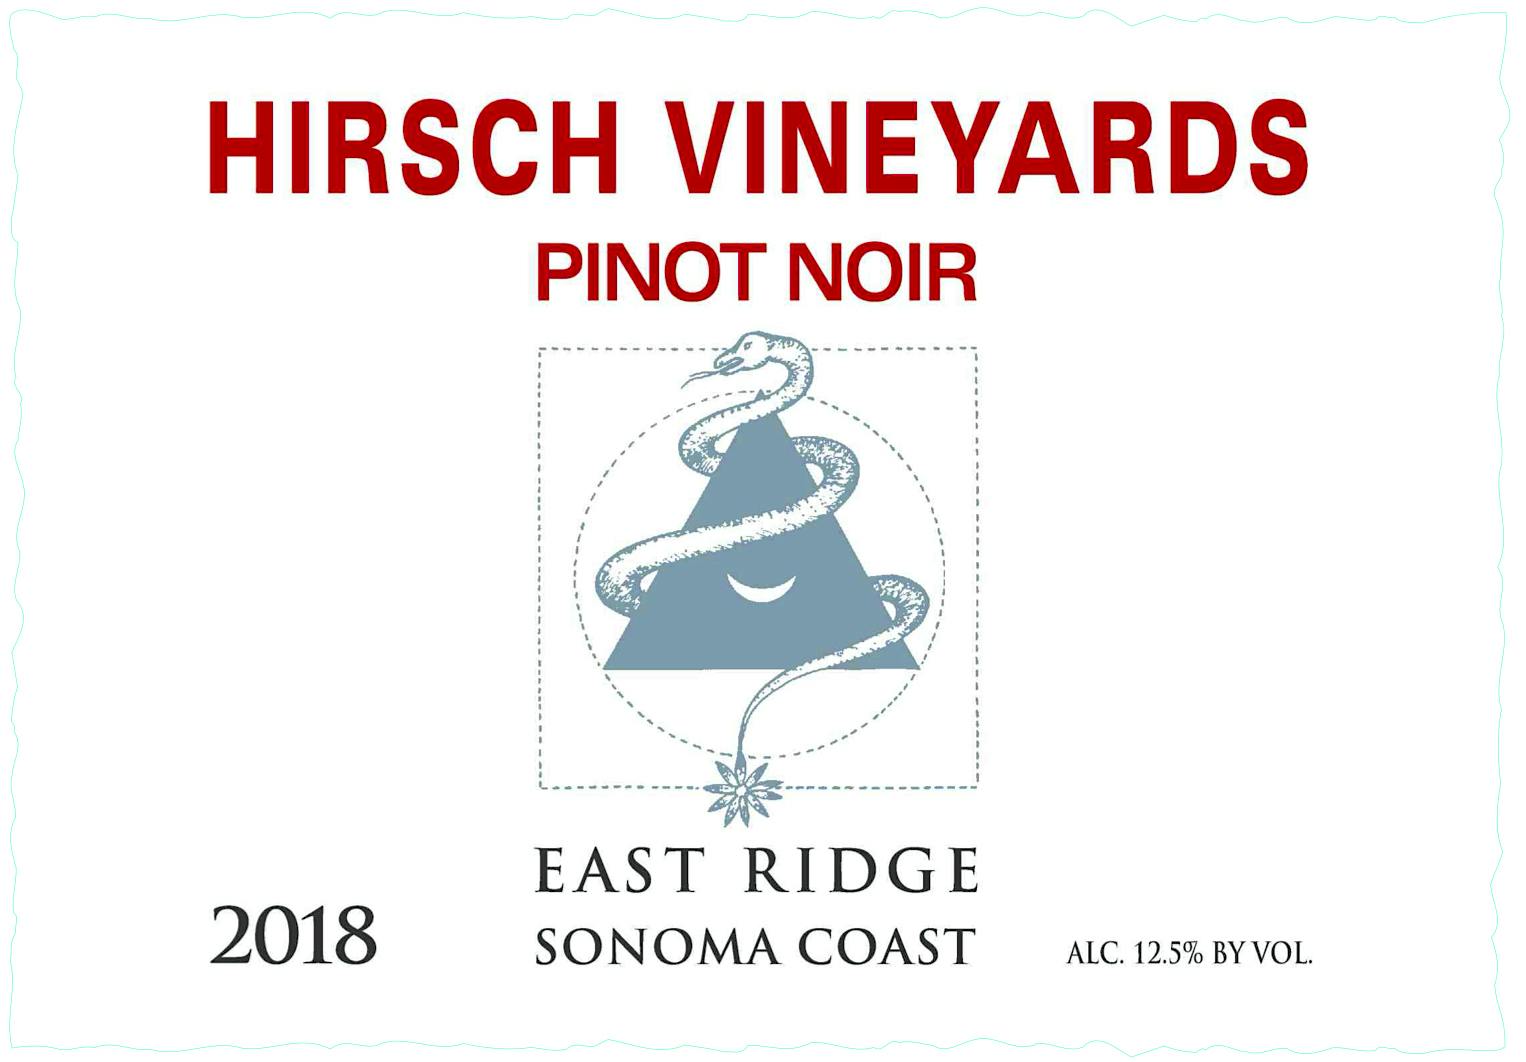 Label for Hirsch